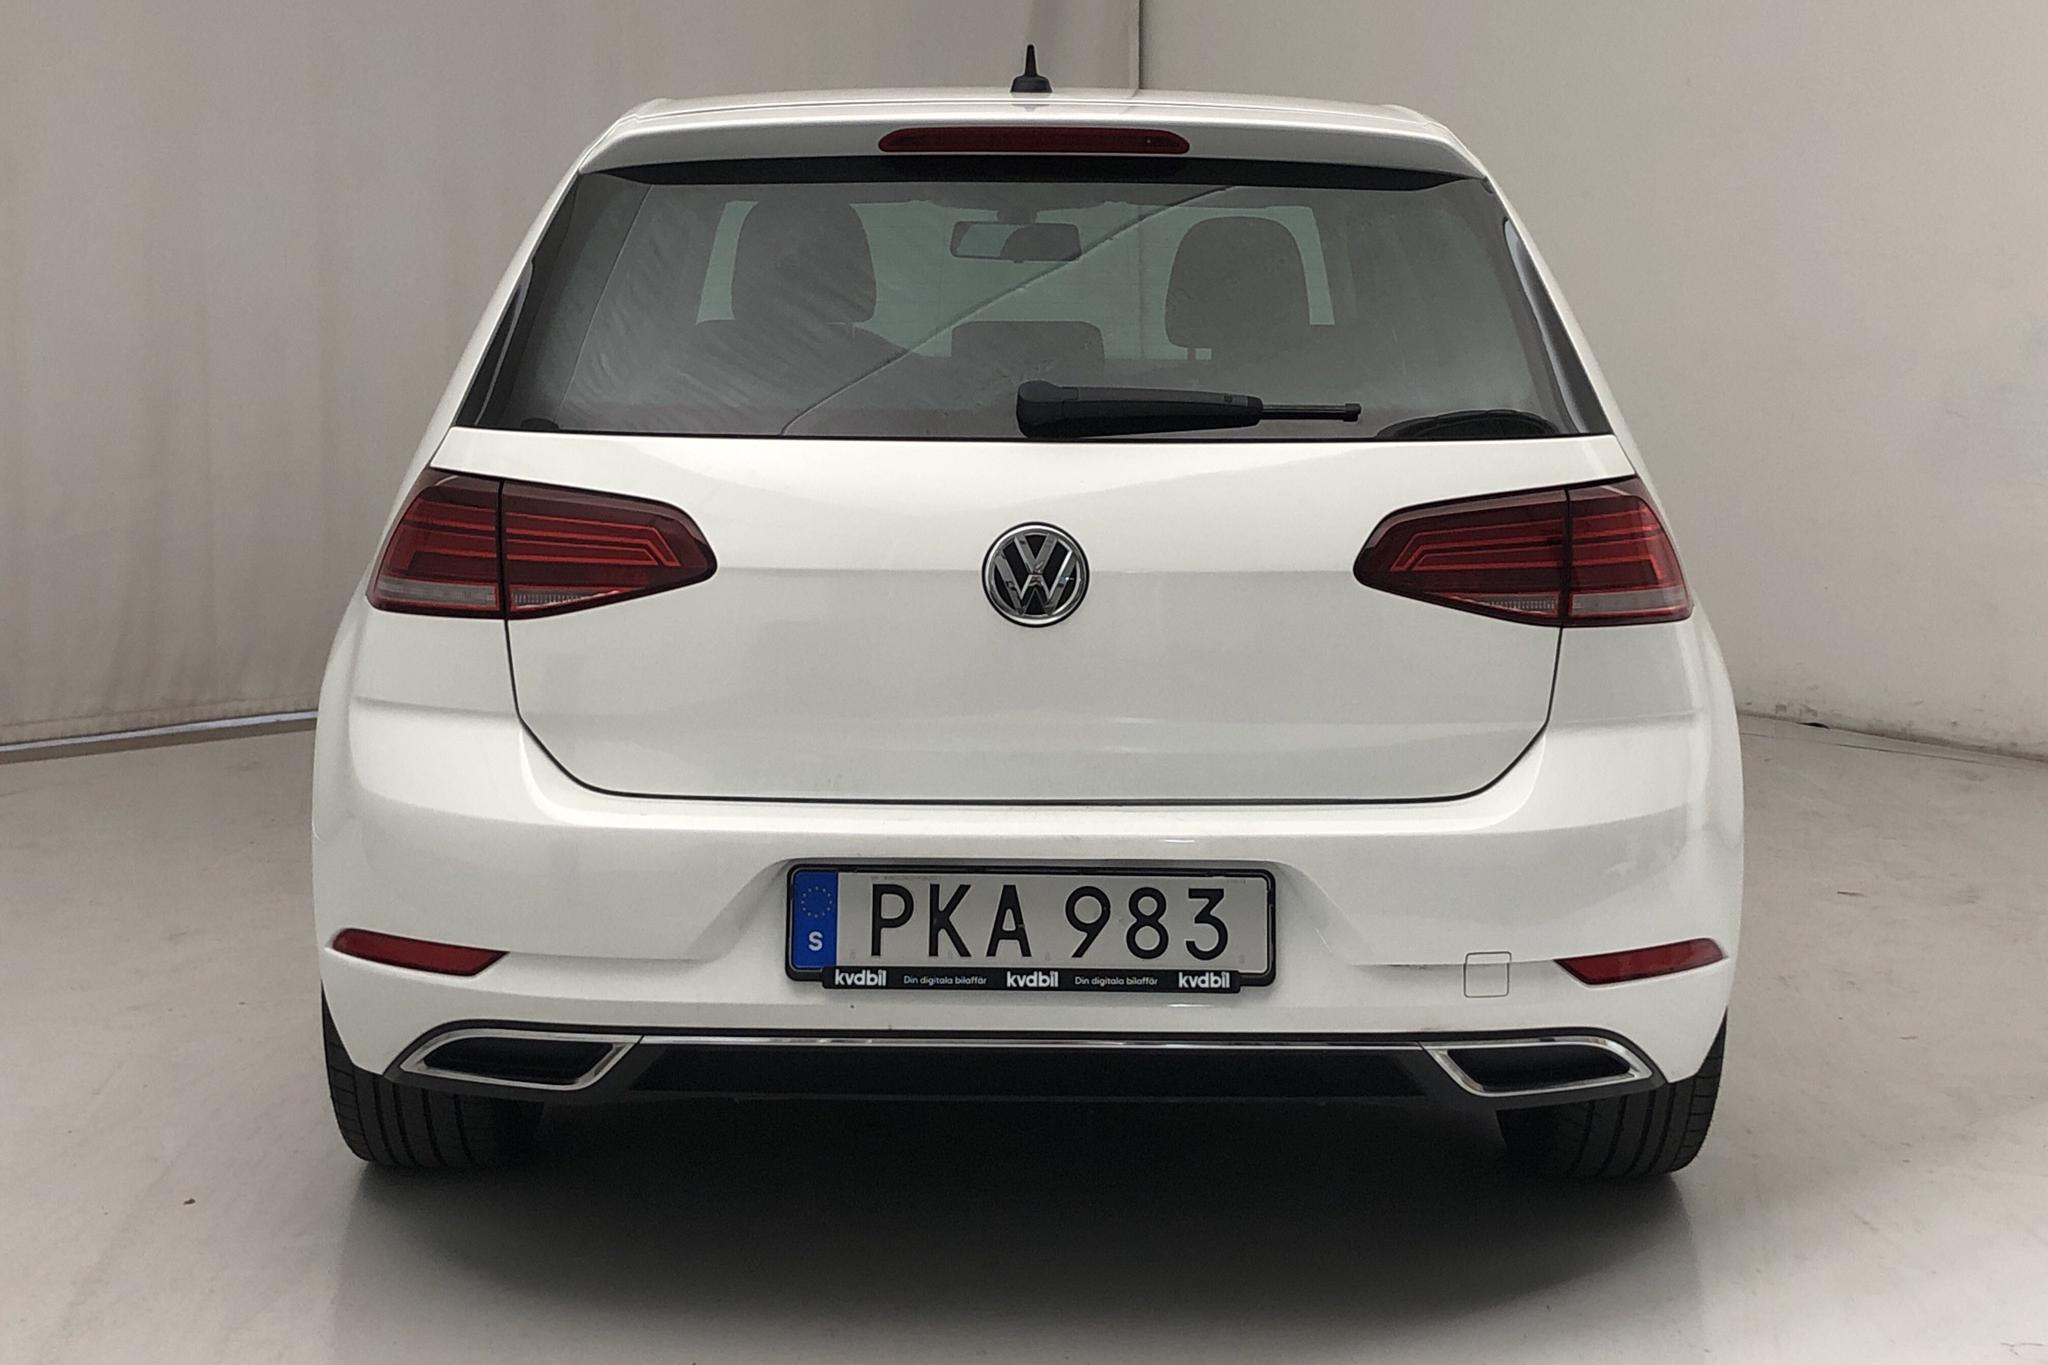 VW Golf VII 2.0 TDI 5dr (150hk) - 149 830 km - Automatic - white - 2017